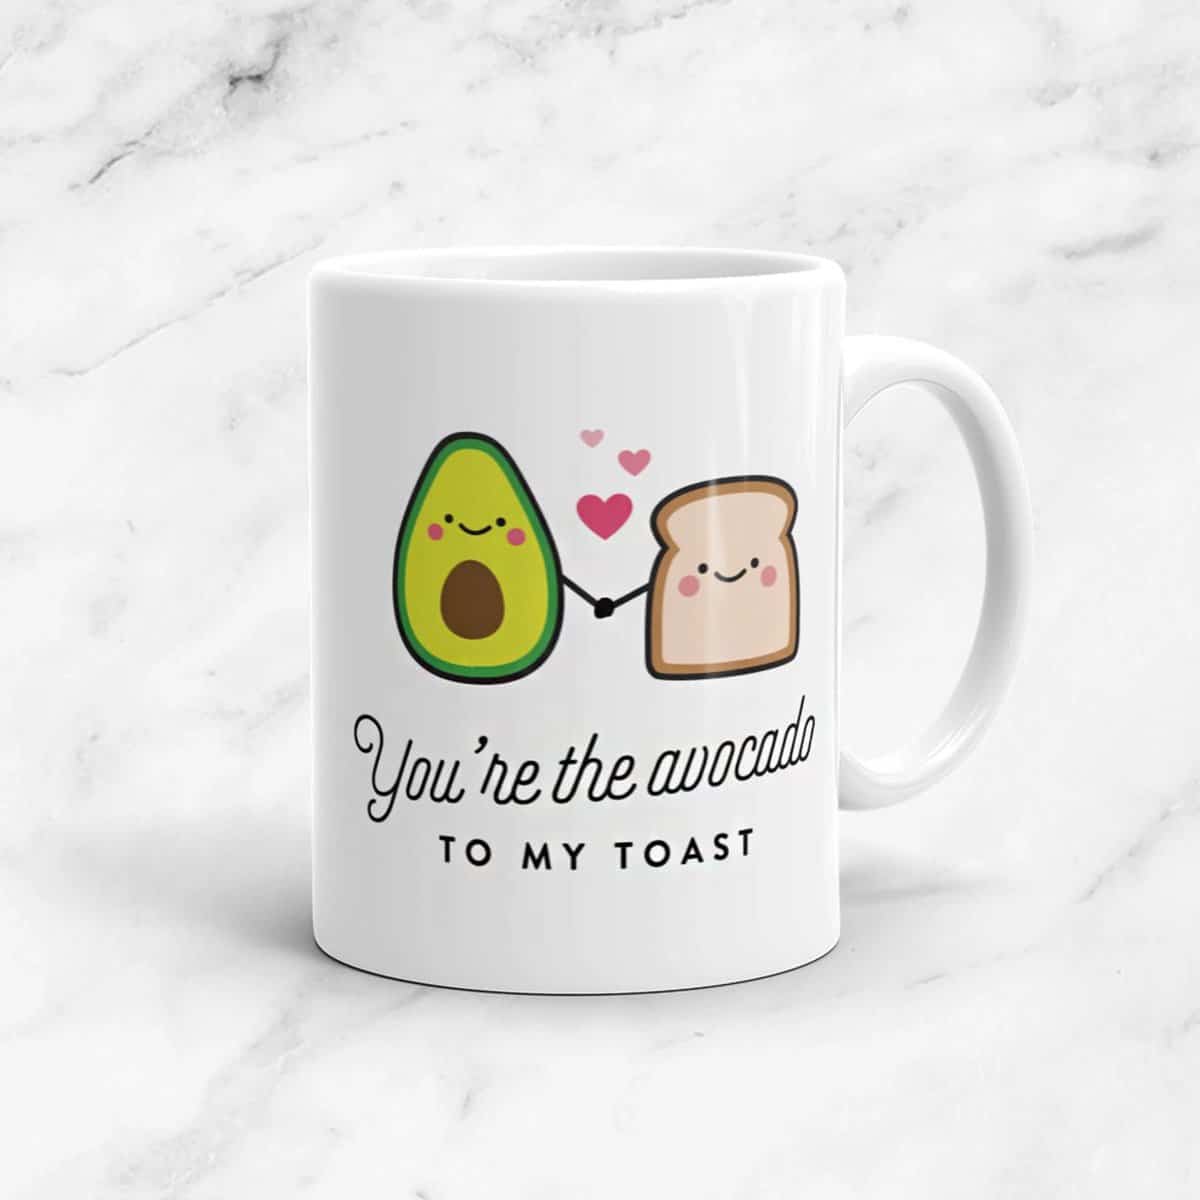 "You're the avocado to my toast" mug